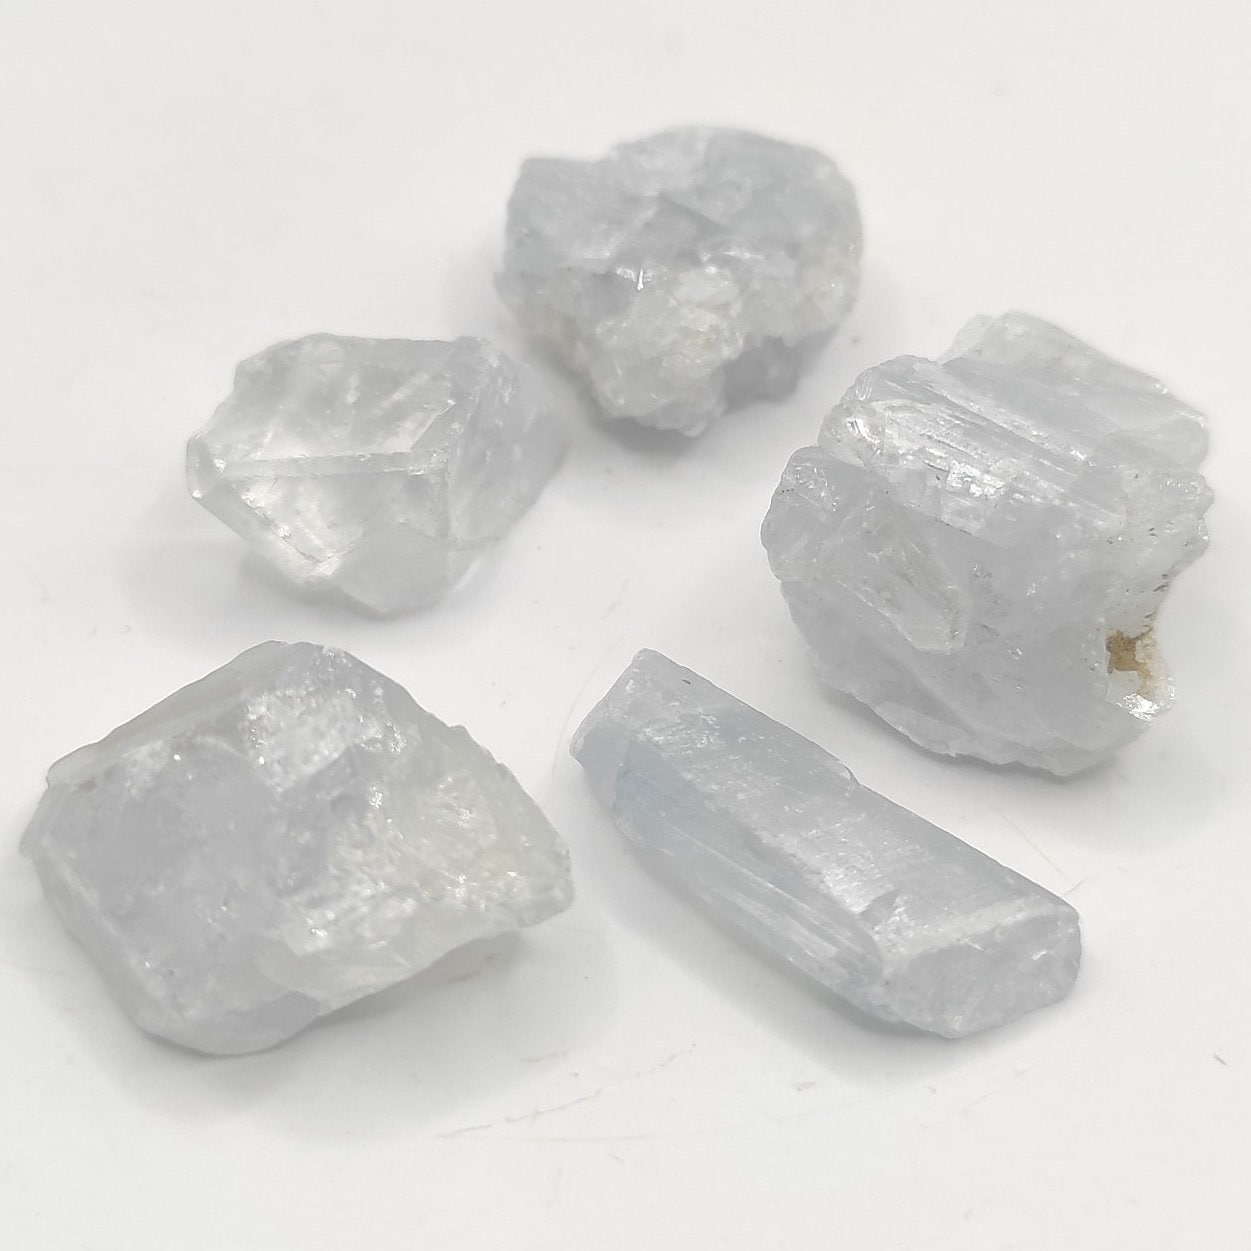 31g (5pc) Lot of Light Blue Celestite - Maybee, Michigan - Natural Celestite Crystals - Raw Celestite Gems - Rough Celestite for Jewelery